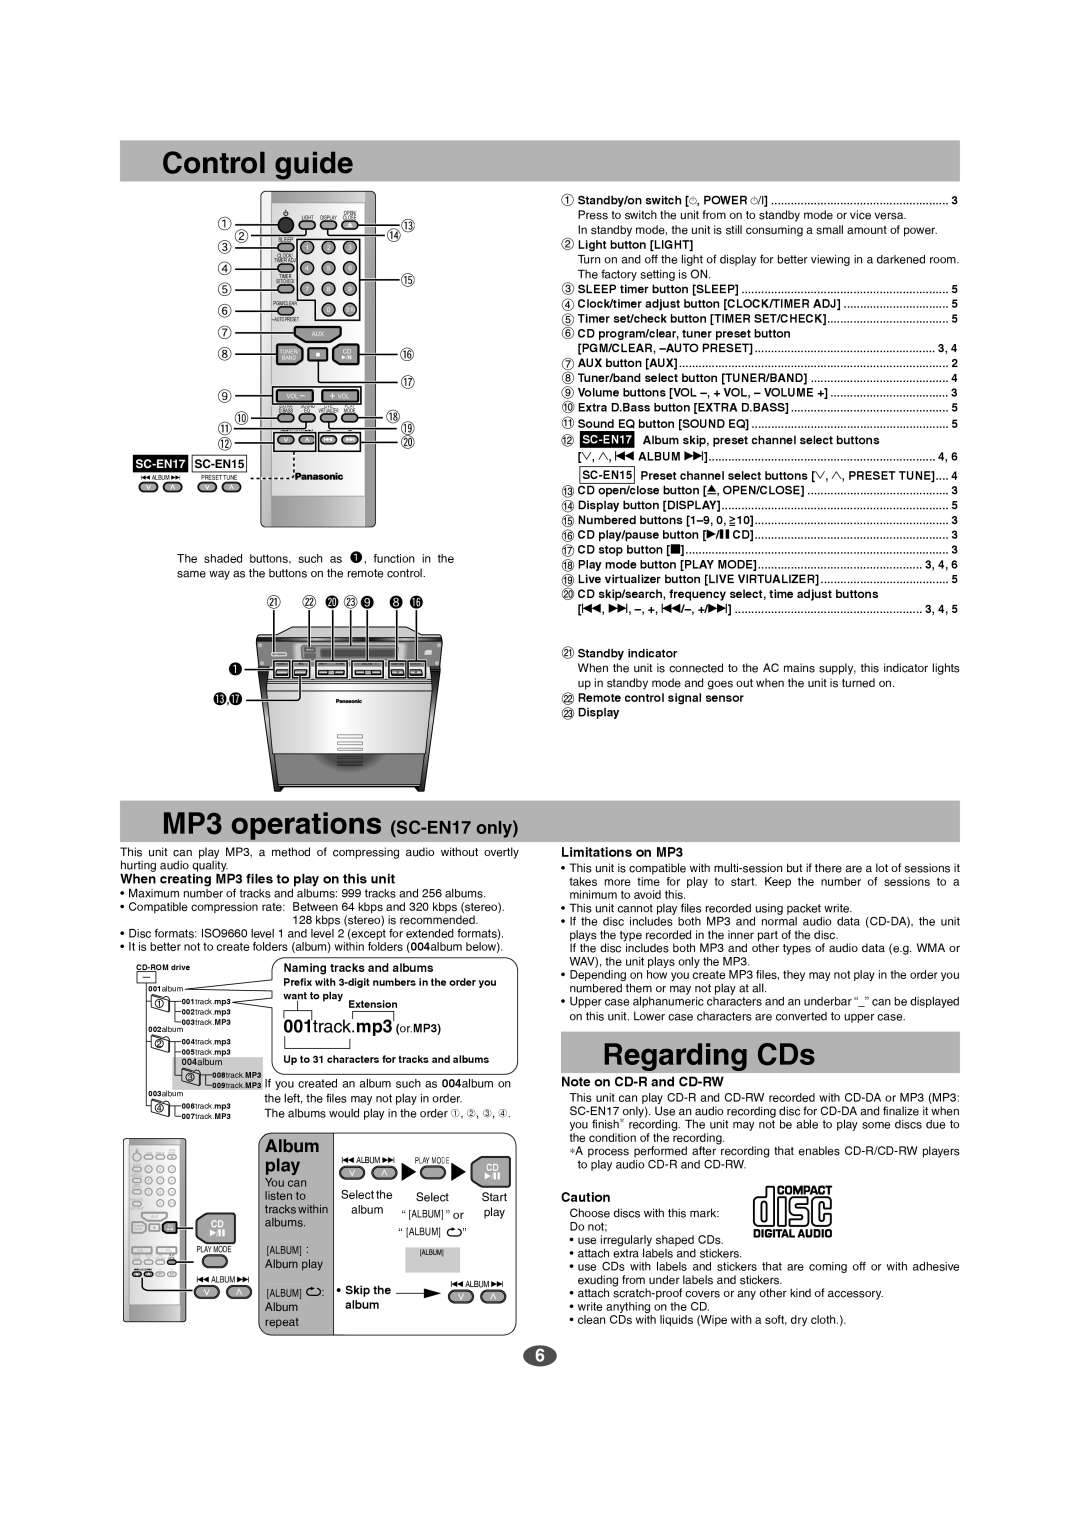 Panasonic SC-EN15 manual Control guide, MP3 operations SC-EN17only, Regarding CDs, Album play, track, Limitations on MP3 